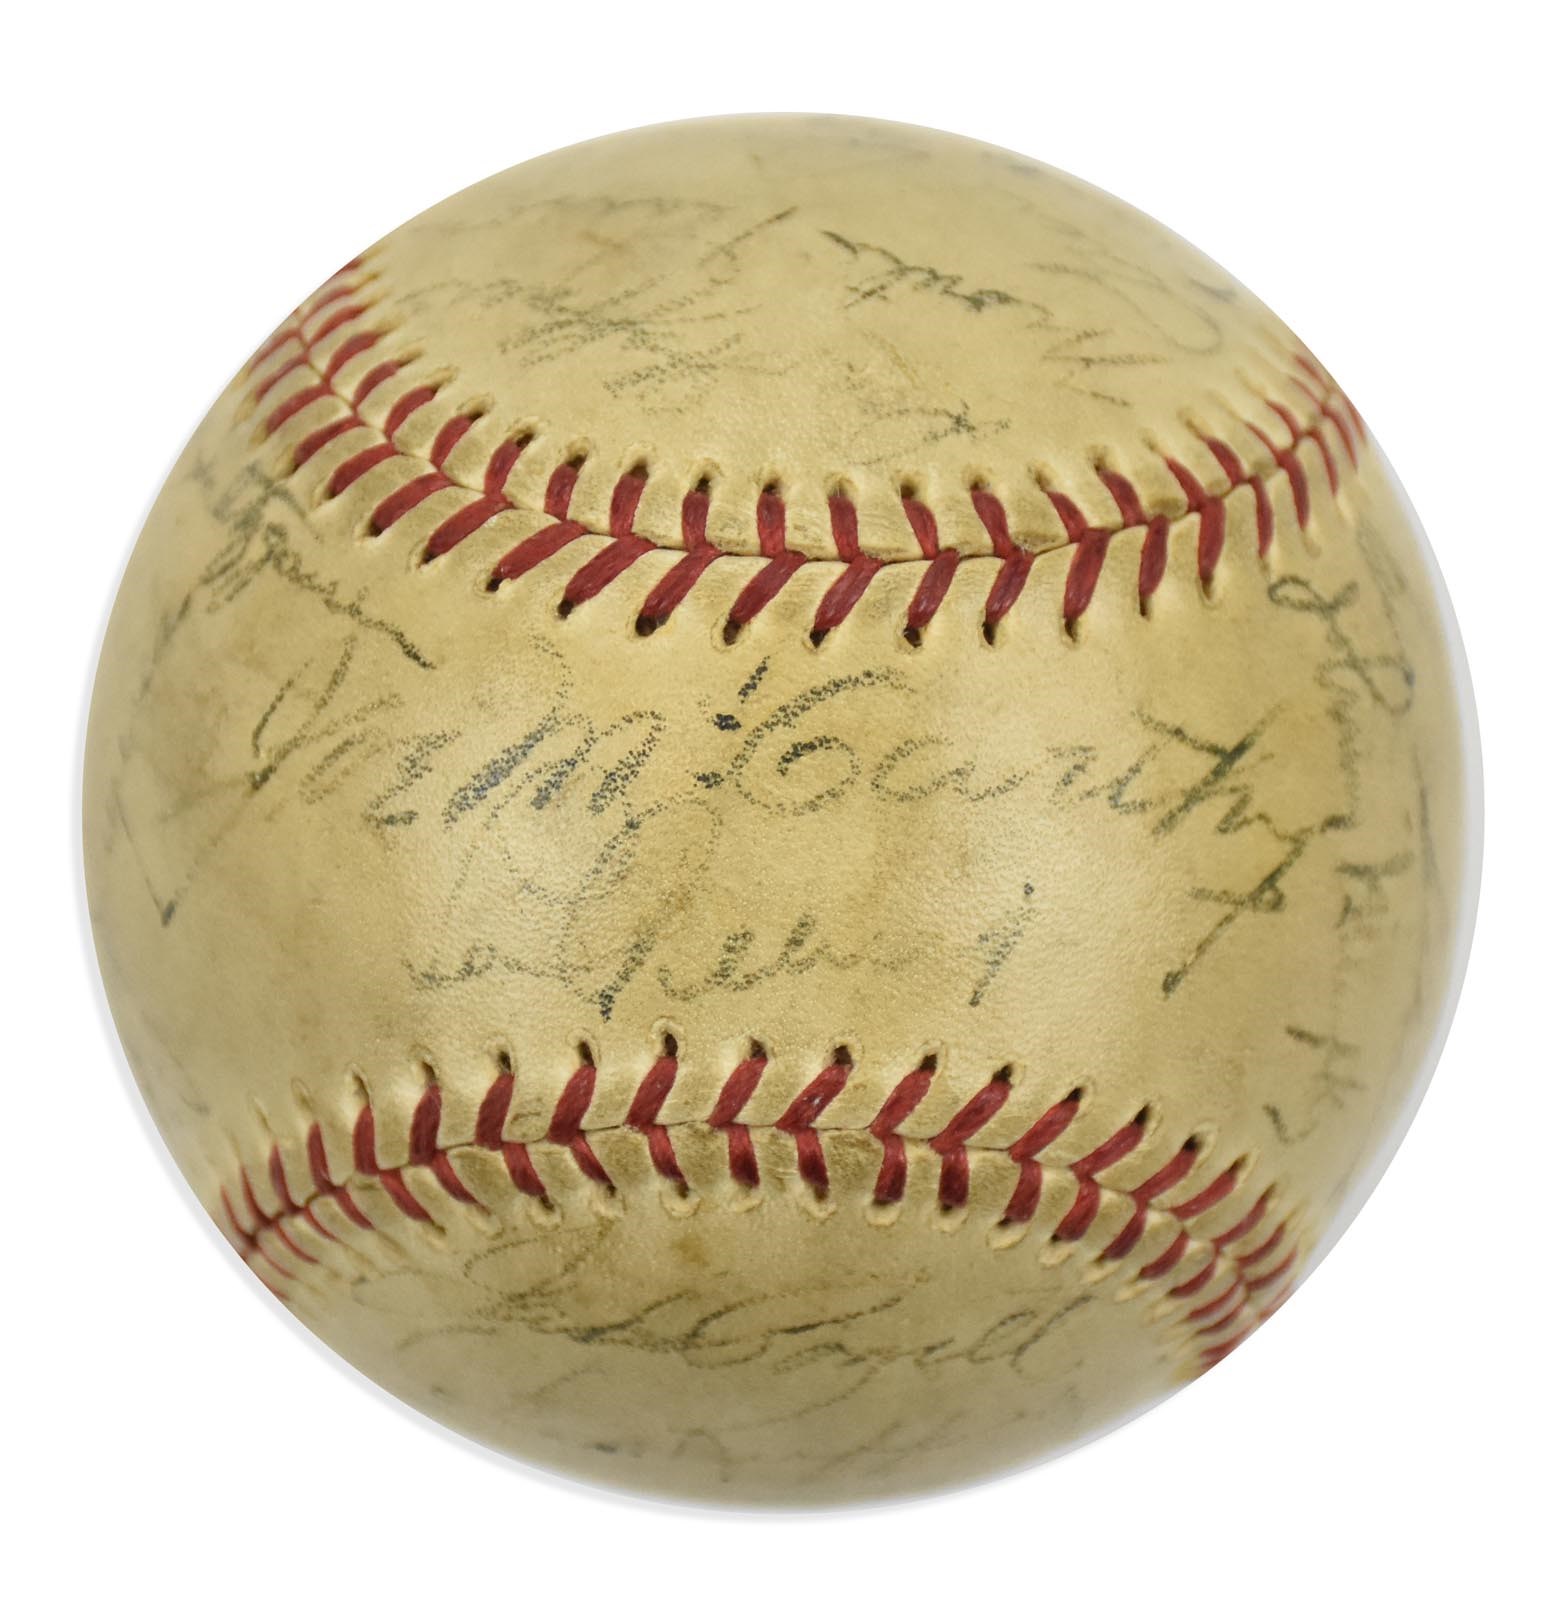 NY Yankees, Giants & Mets - 1937 World Champion New York Yankees Team Signed Baseball (PSA)